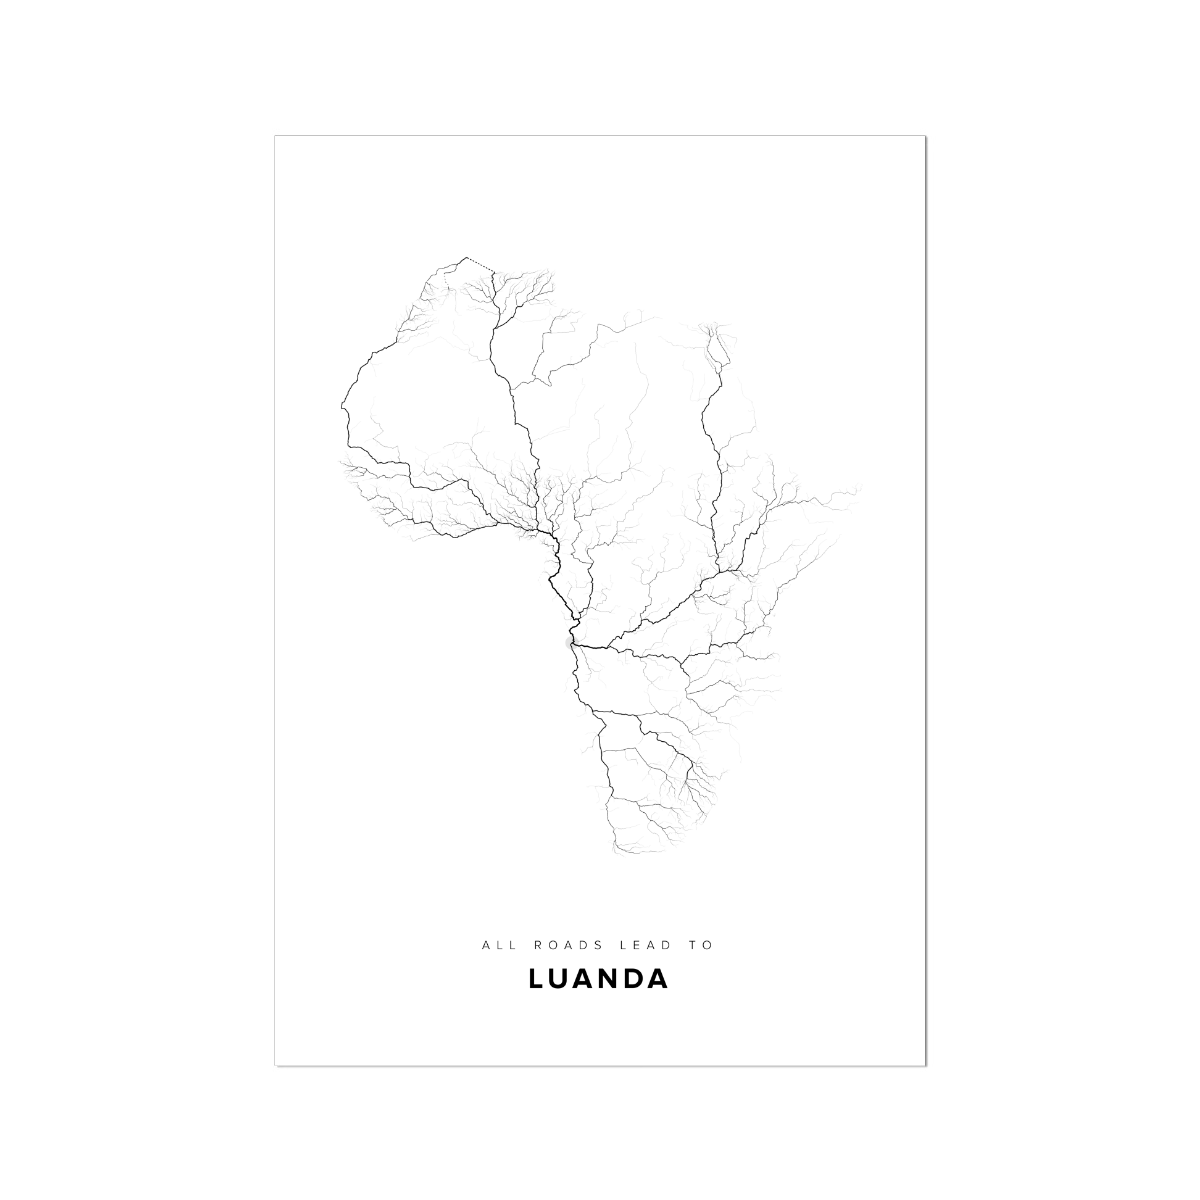 All roads lead to Luanda (Angola) Fine Art Map Print